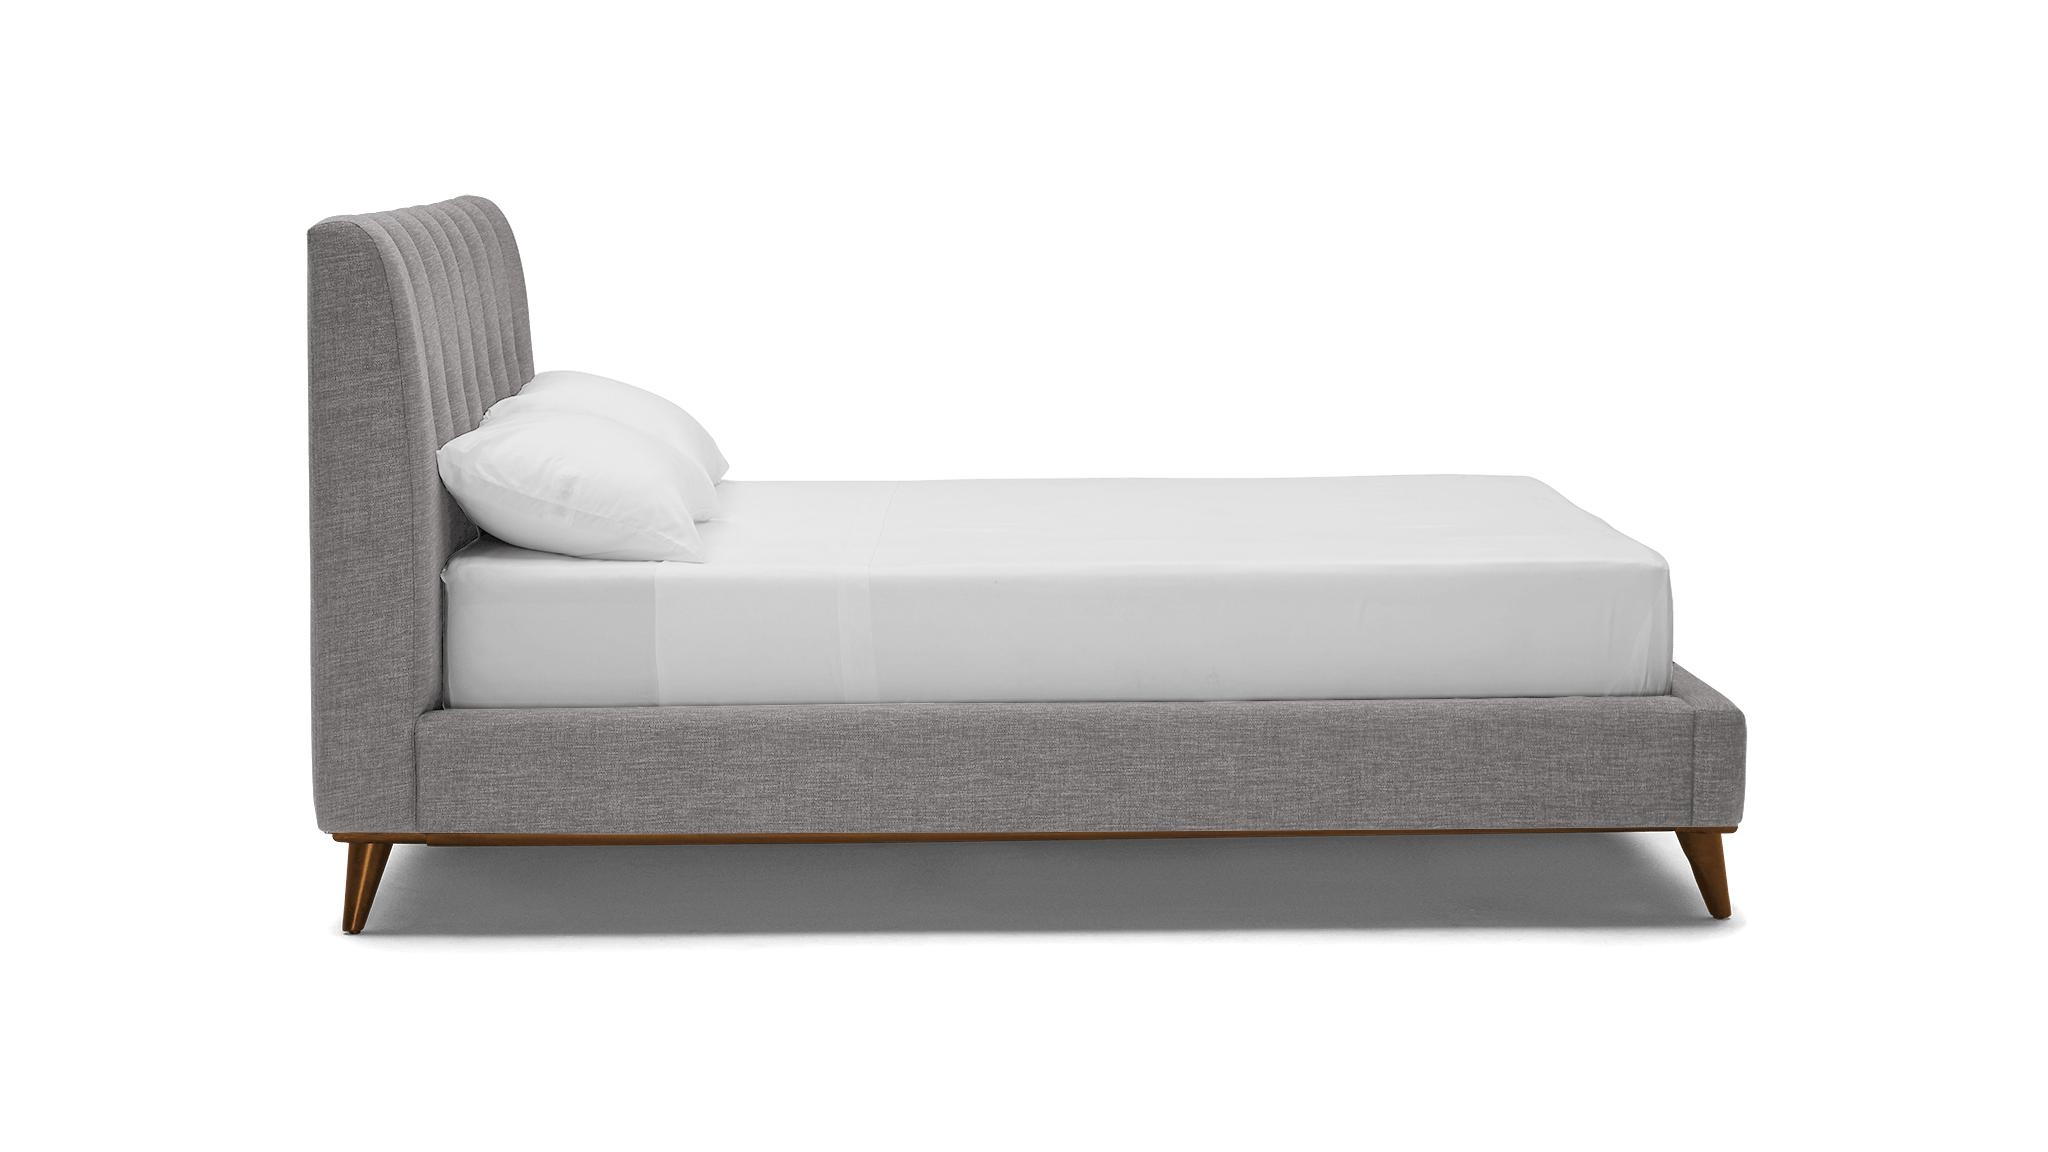 Gray Hughes Mid Century Modern Bed - Taylor Felt Grey - Mocha - Cal King - Image 2